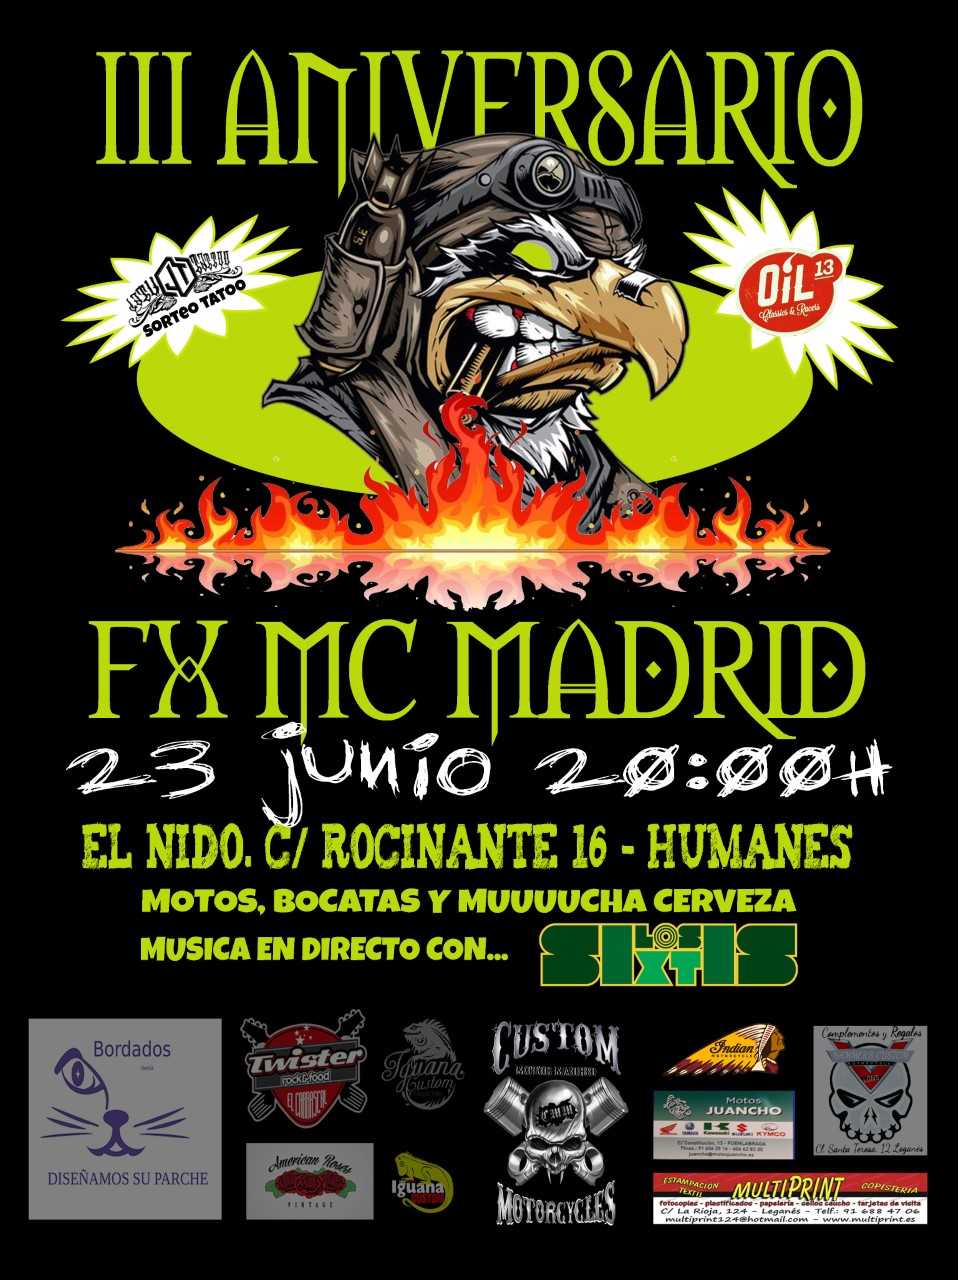 Oil13 - FX MC Madrid 2018 - 3º Aniversario